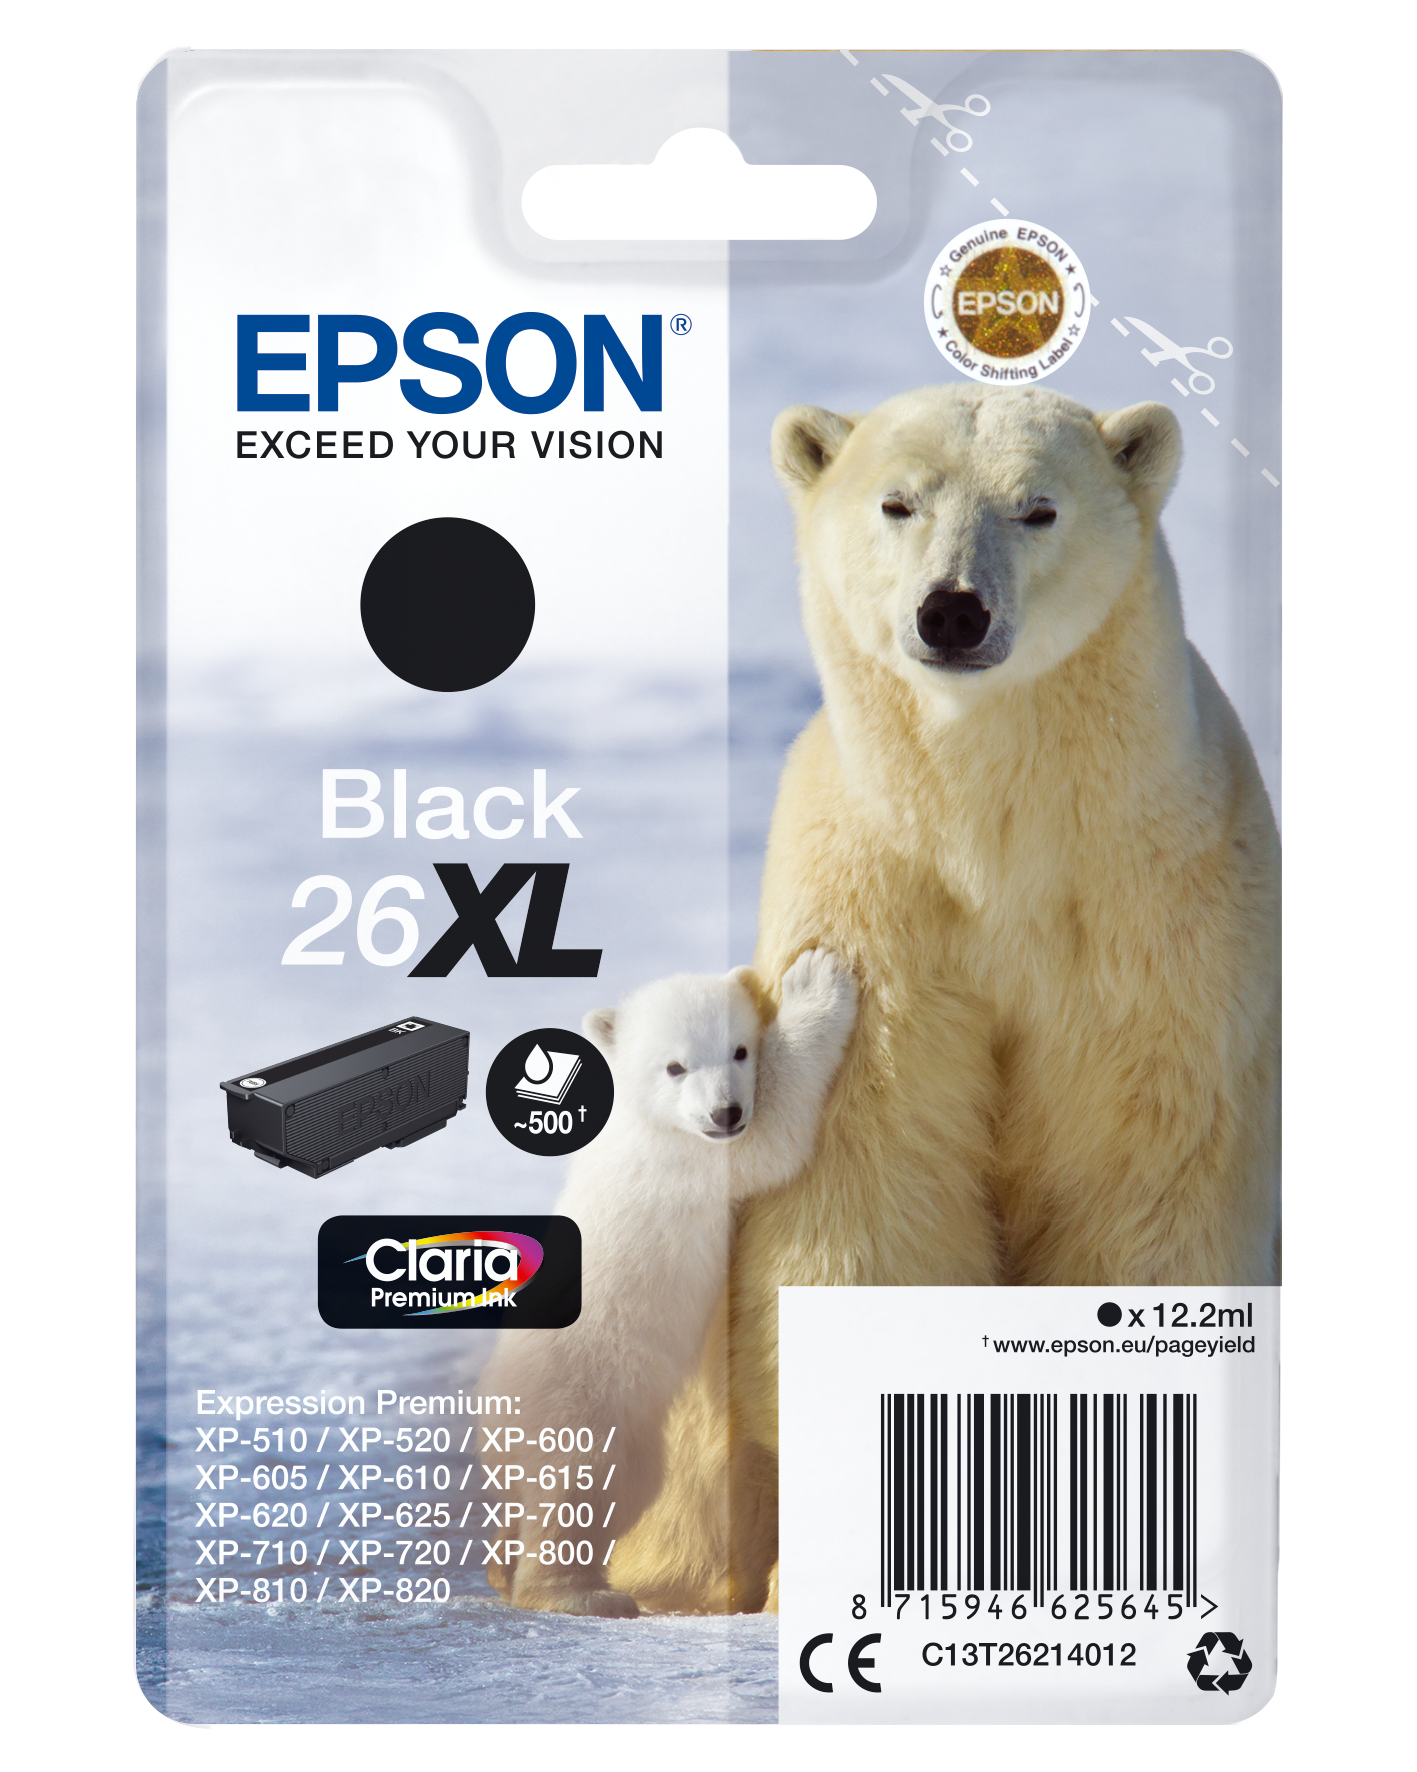 Epson Singlepack Black 26XL Claria Premium Ink single pack / zwart